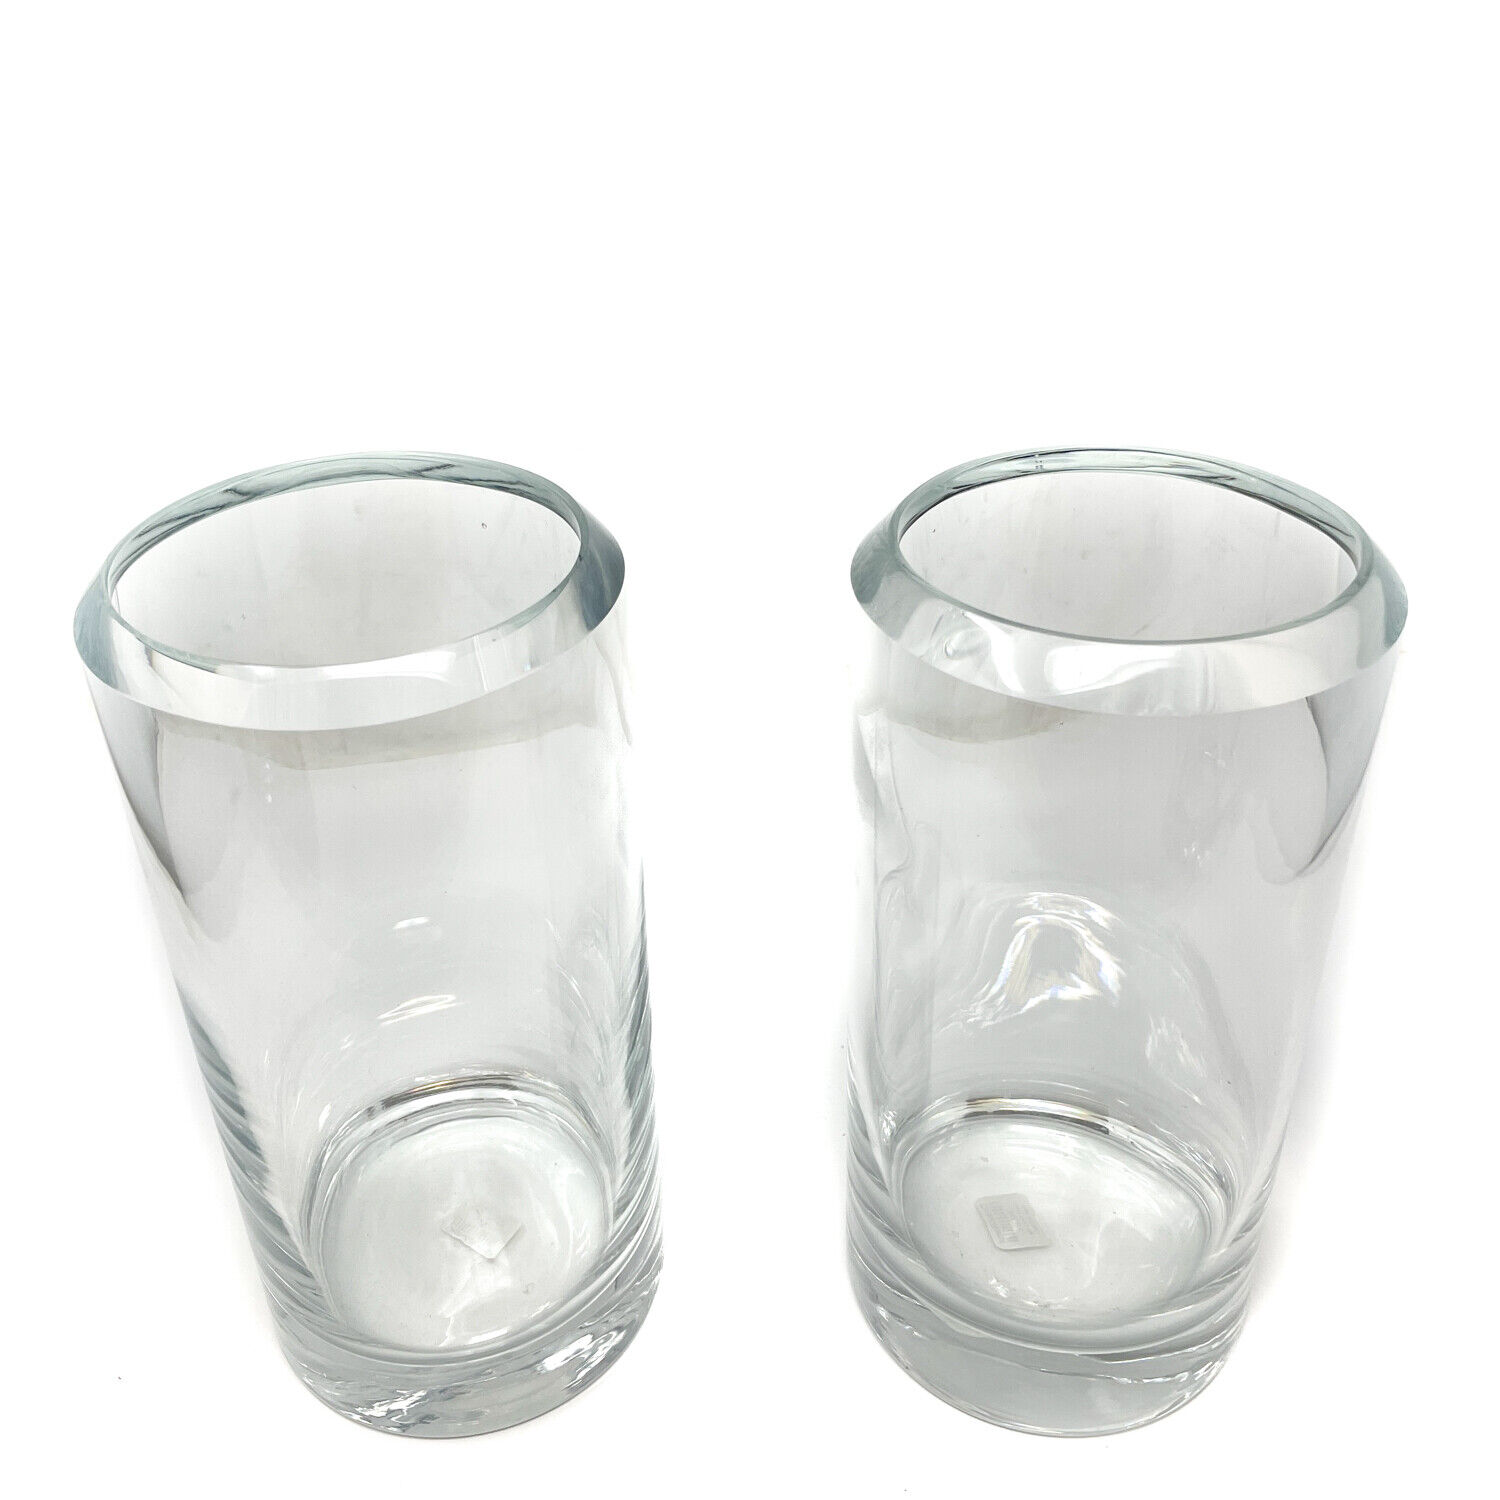 2 Pcs Crate & Barrel 593-478 Savoy Vase Large, Clear Glass